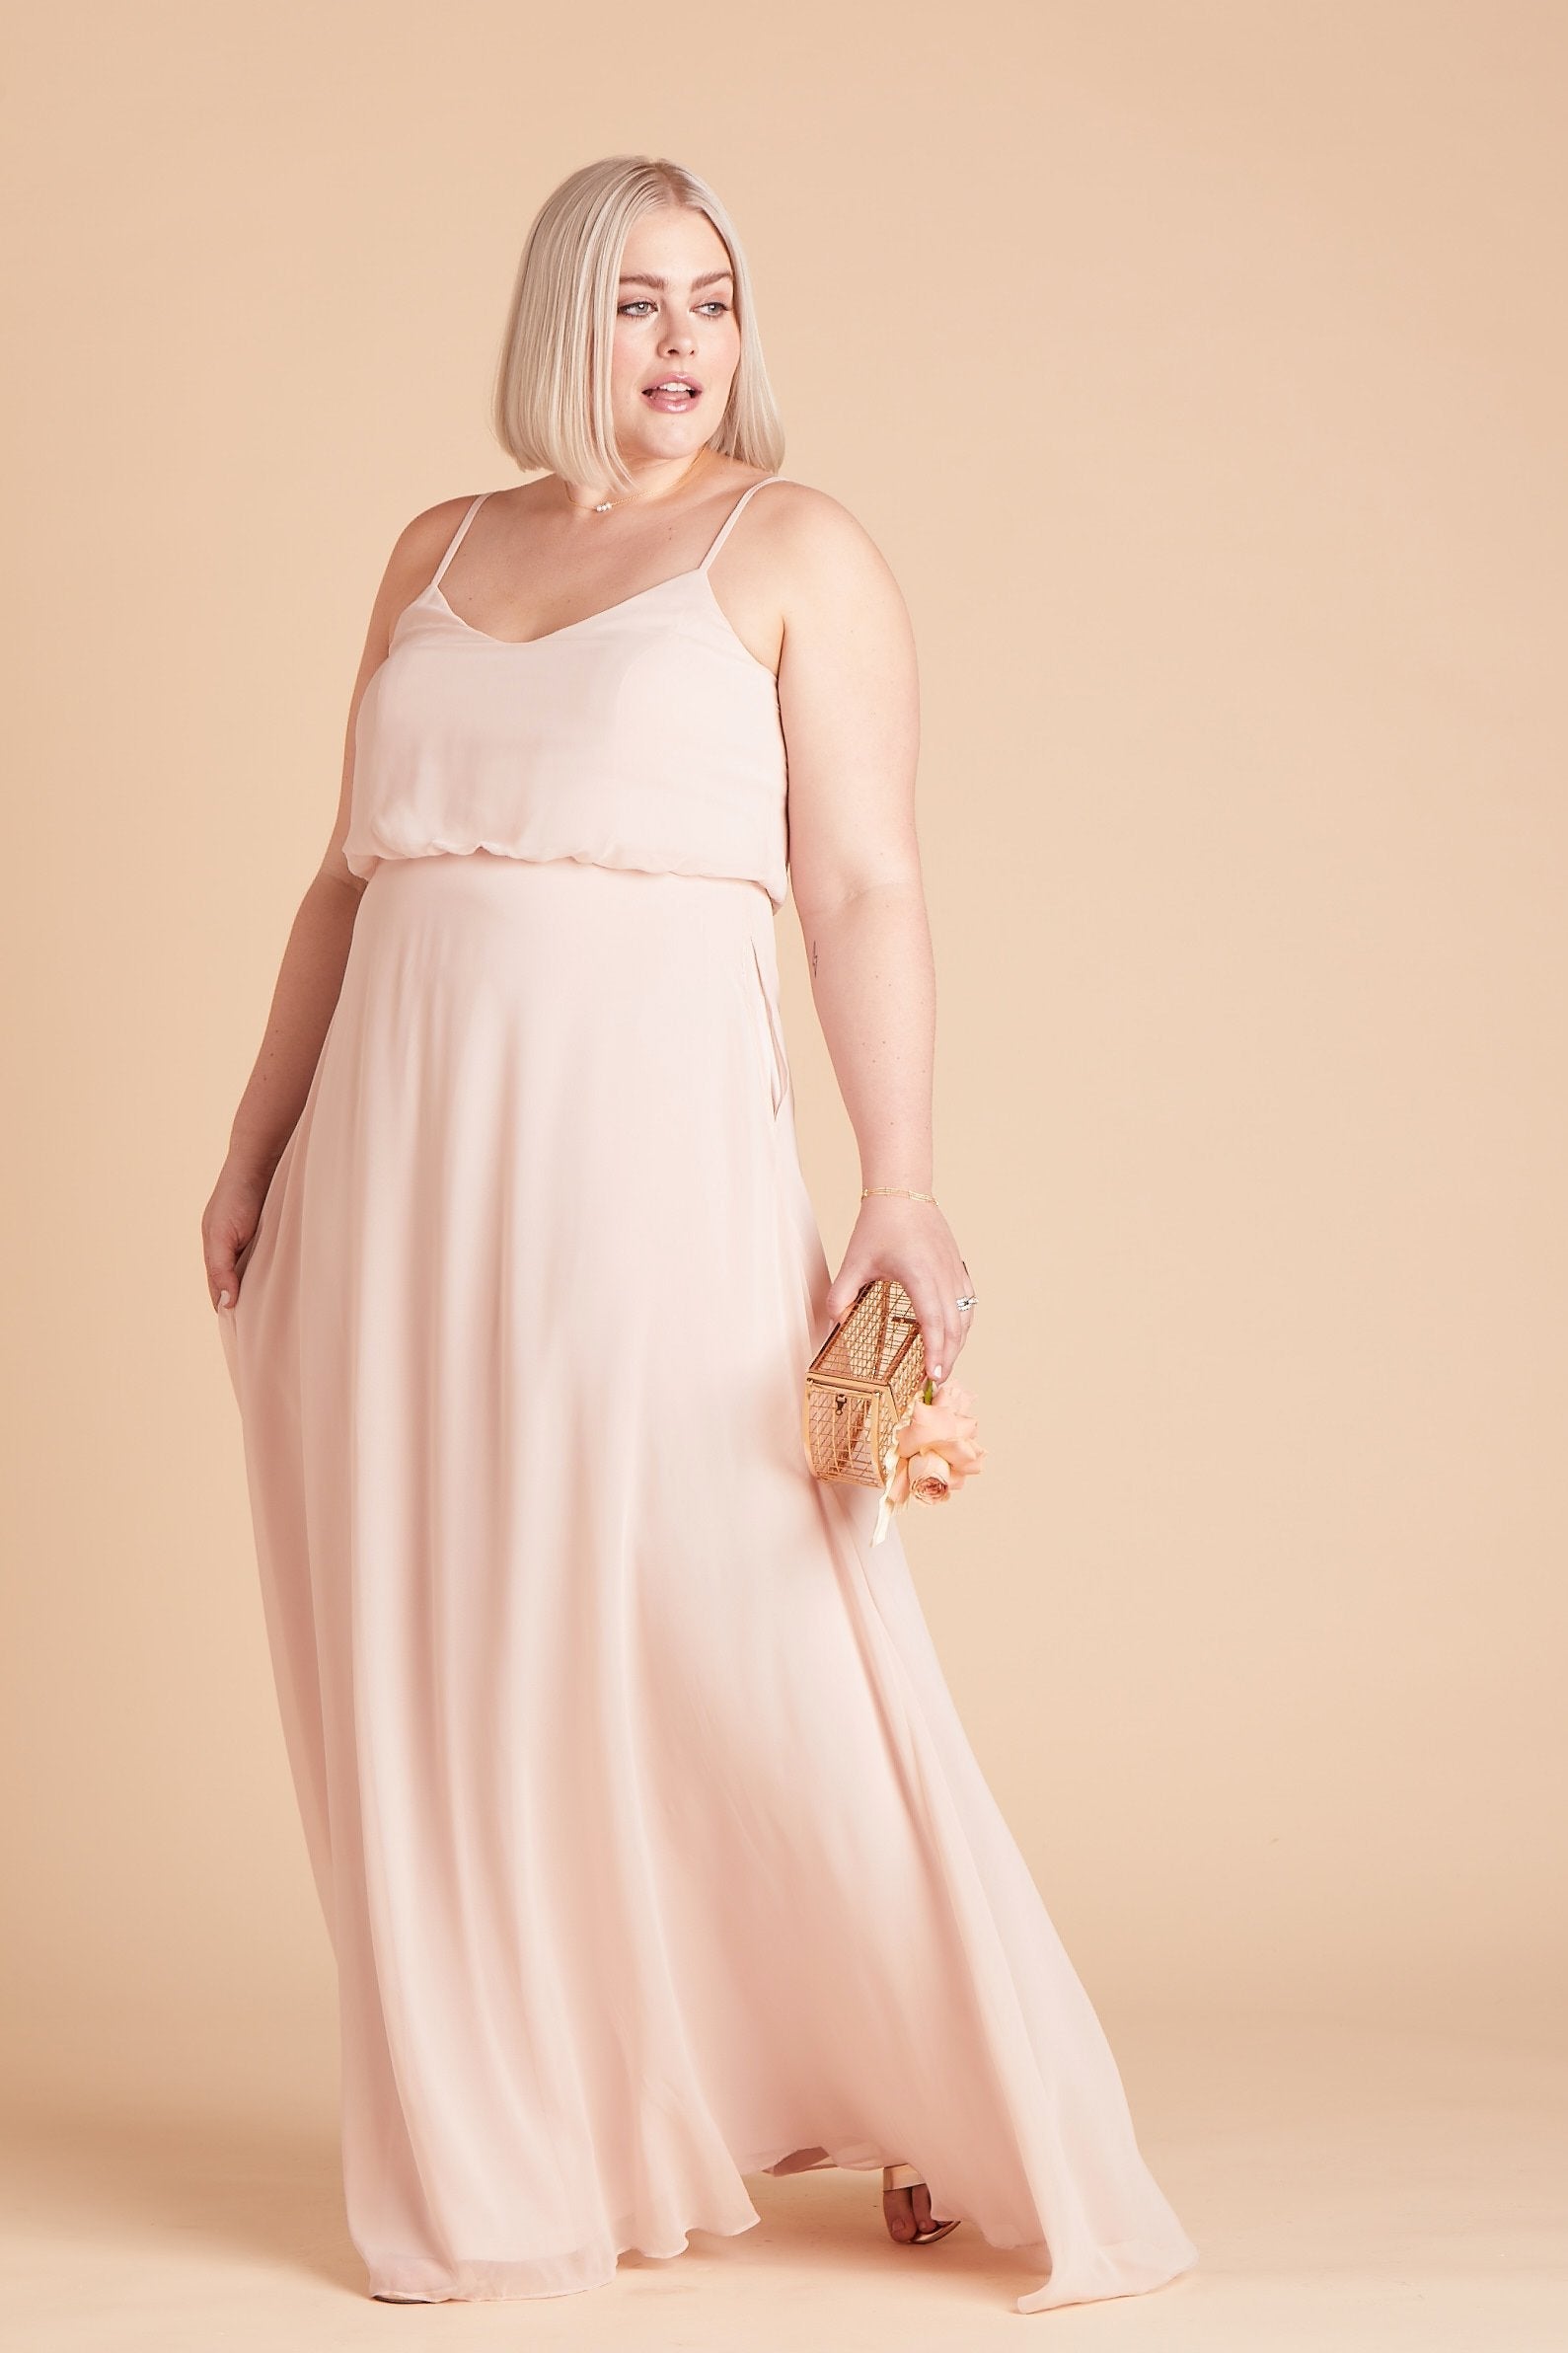 Gwennie plus size bridesmaid dress in pale blush chiffon by Birdy Grey, front view